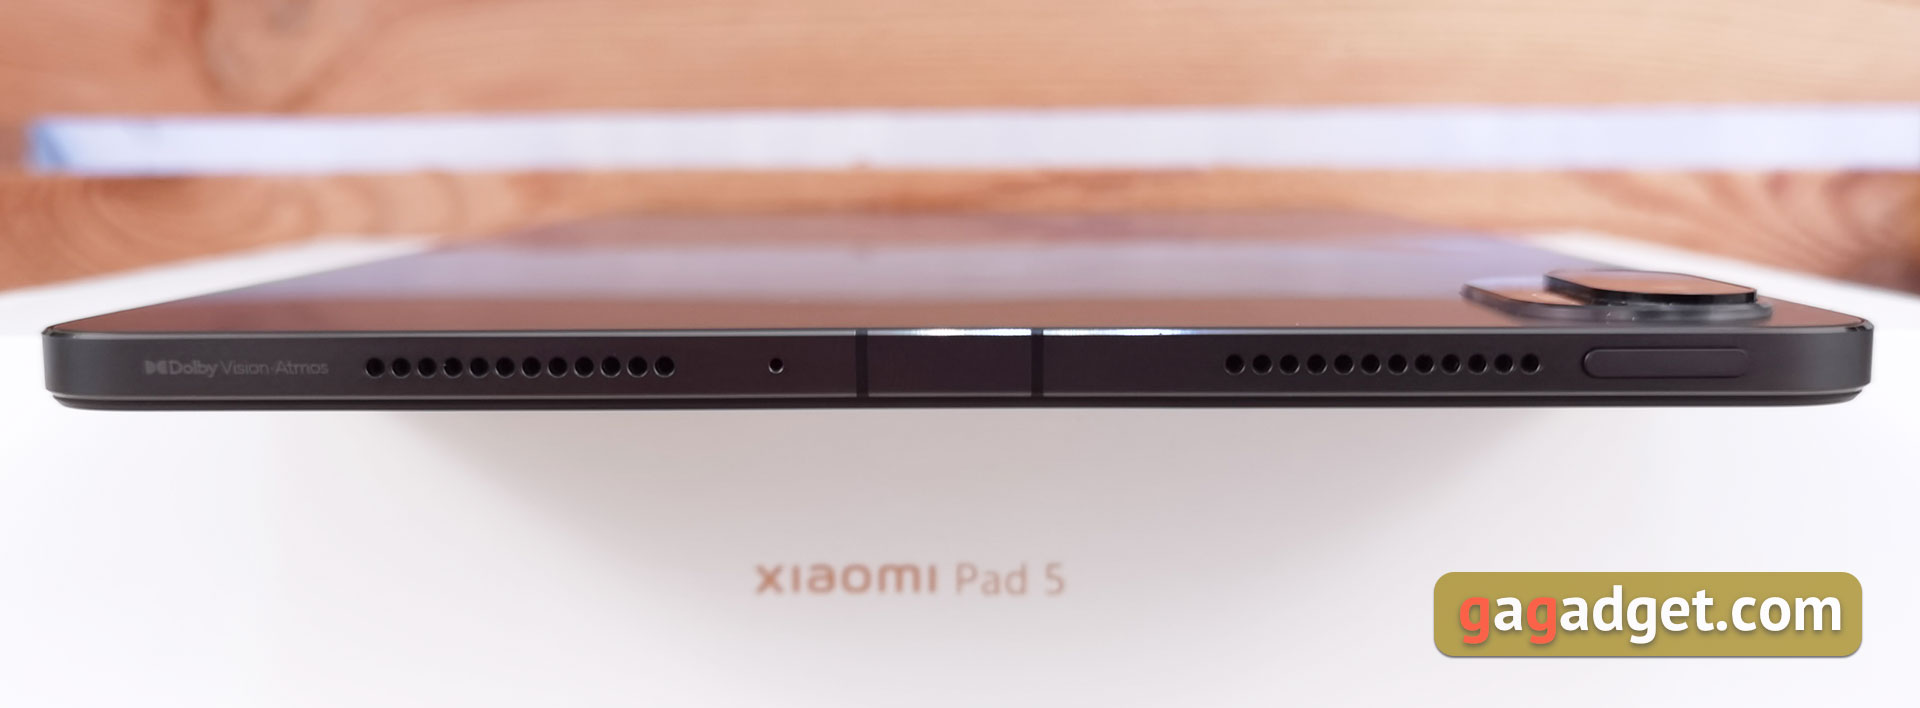 Xiaomi Pad 5 Review-13